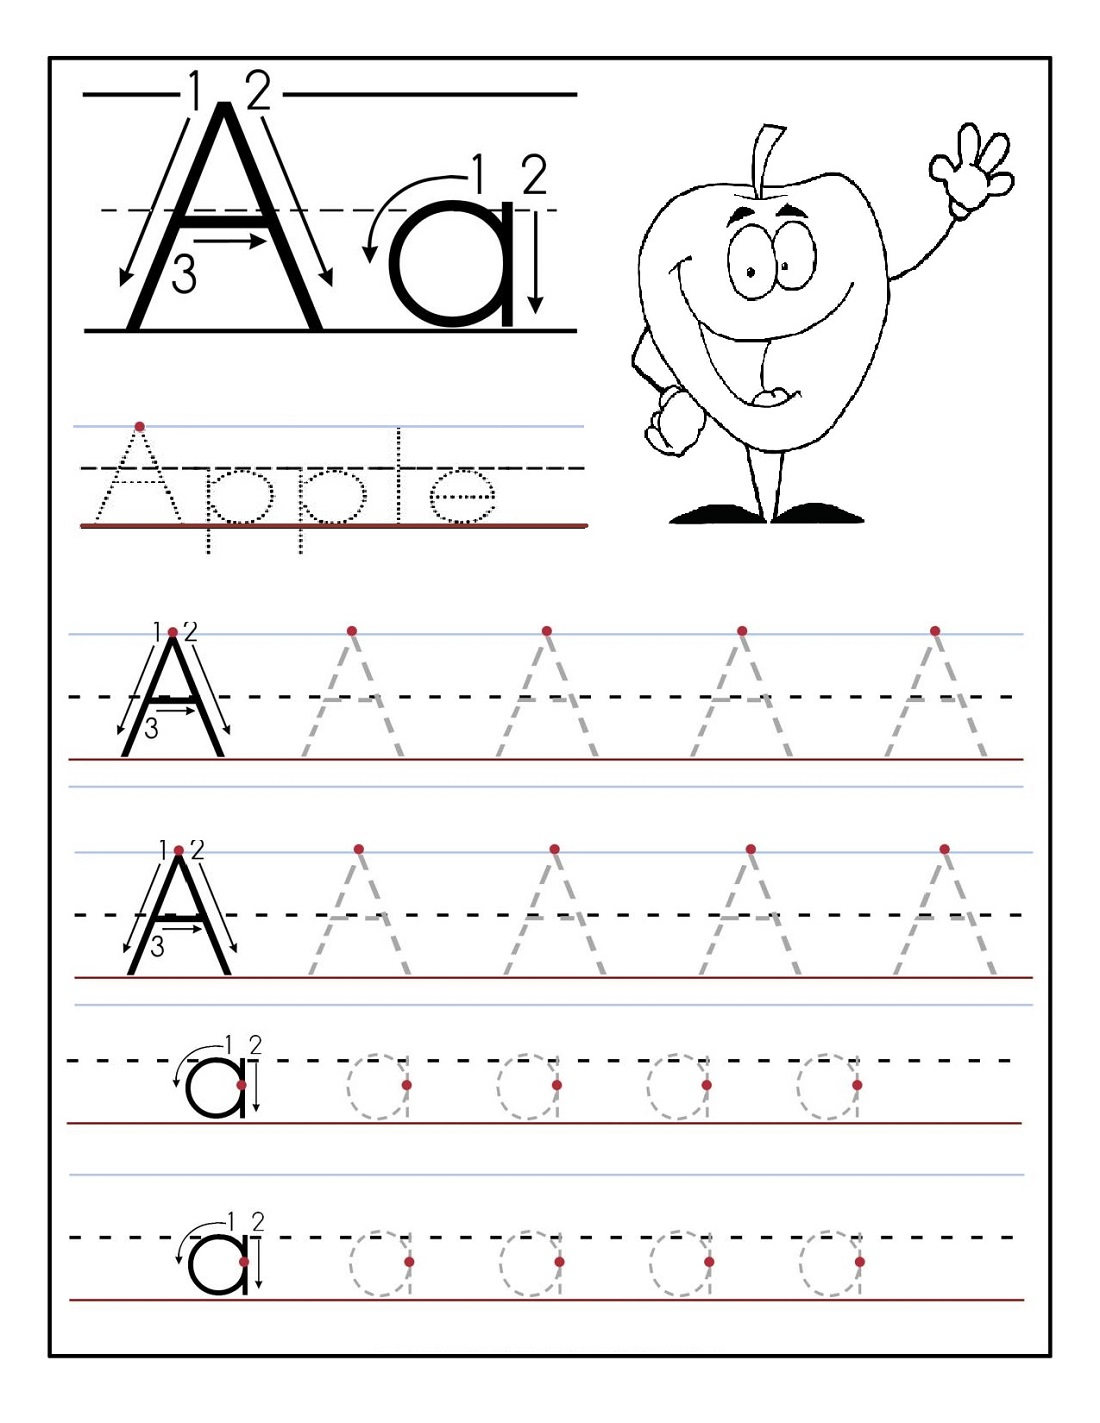 Worksheet ~ Alphabet Tracing Worksheet For Preschool And